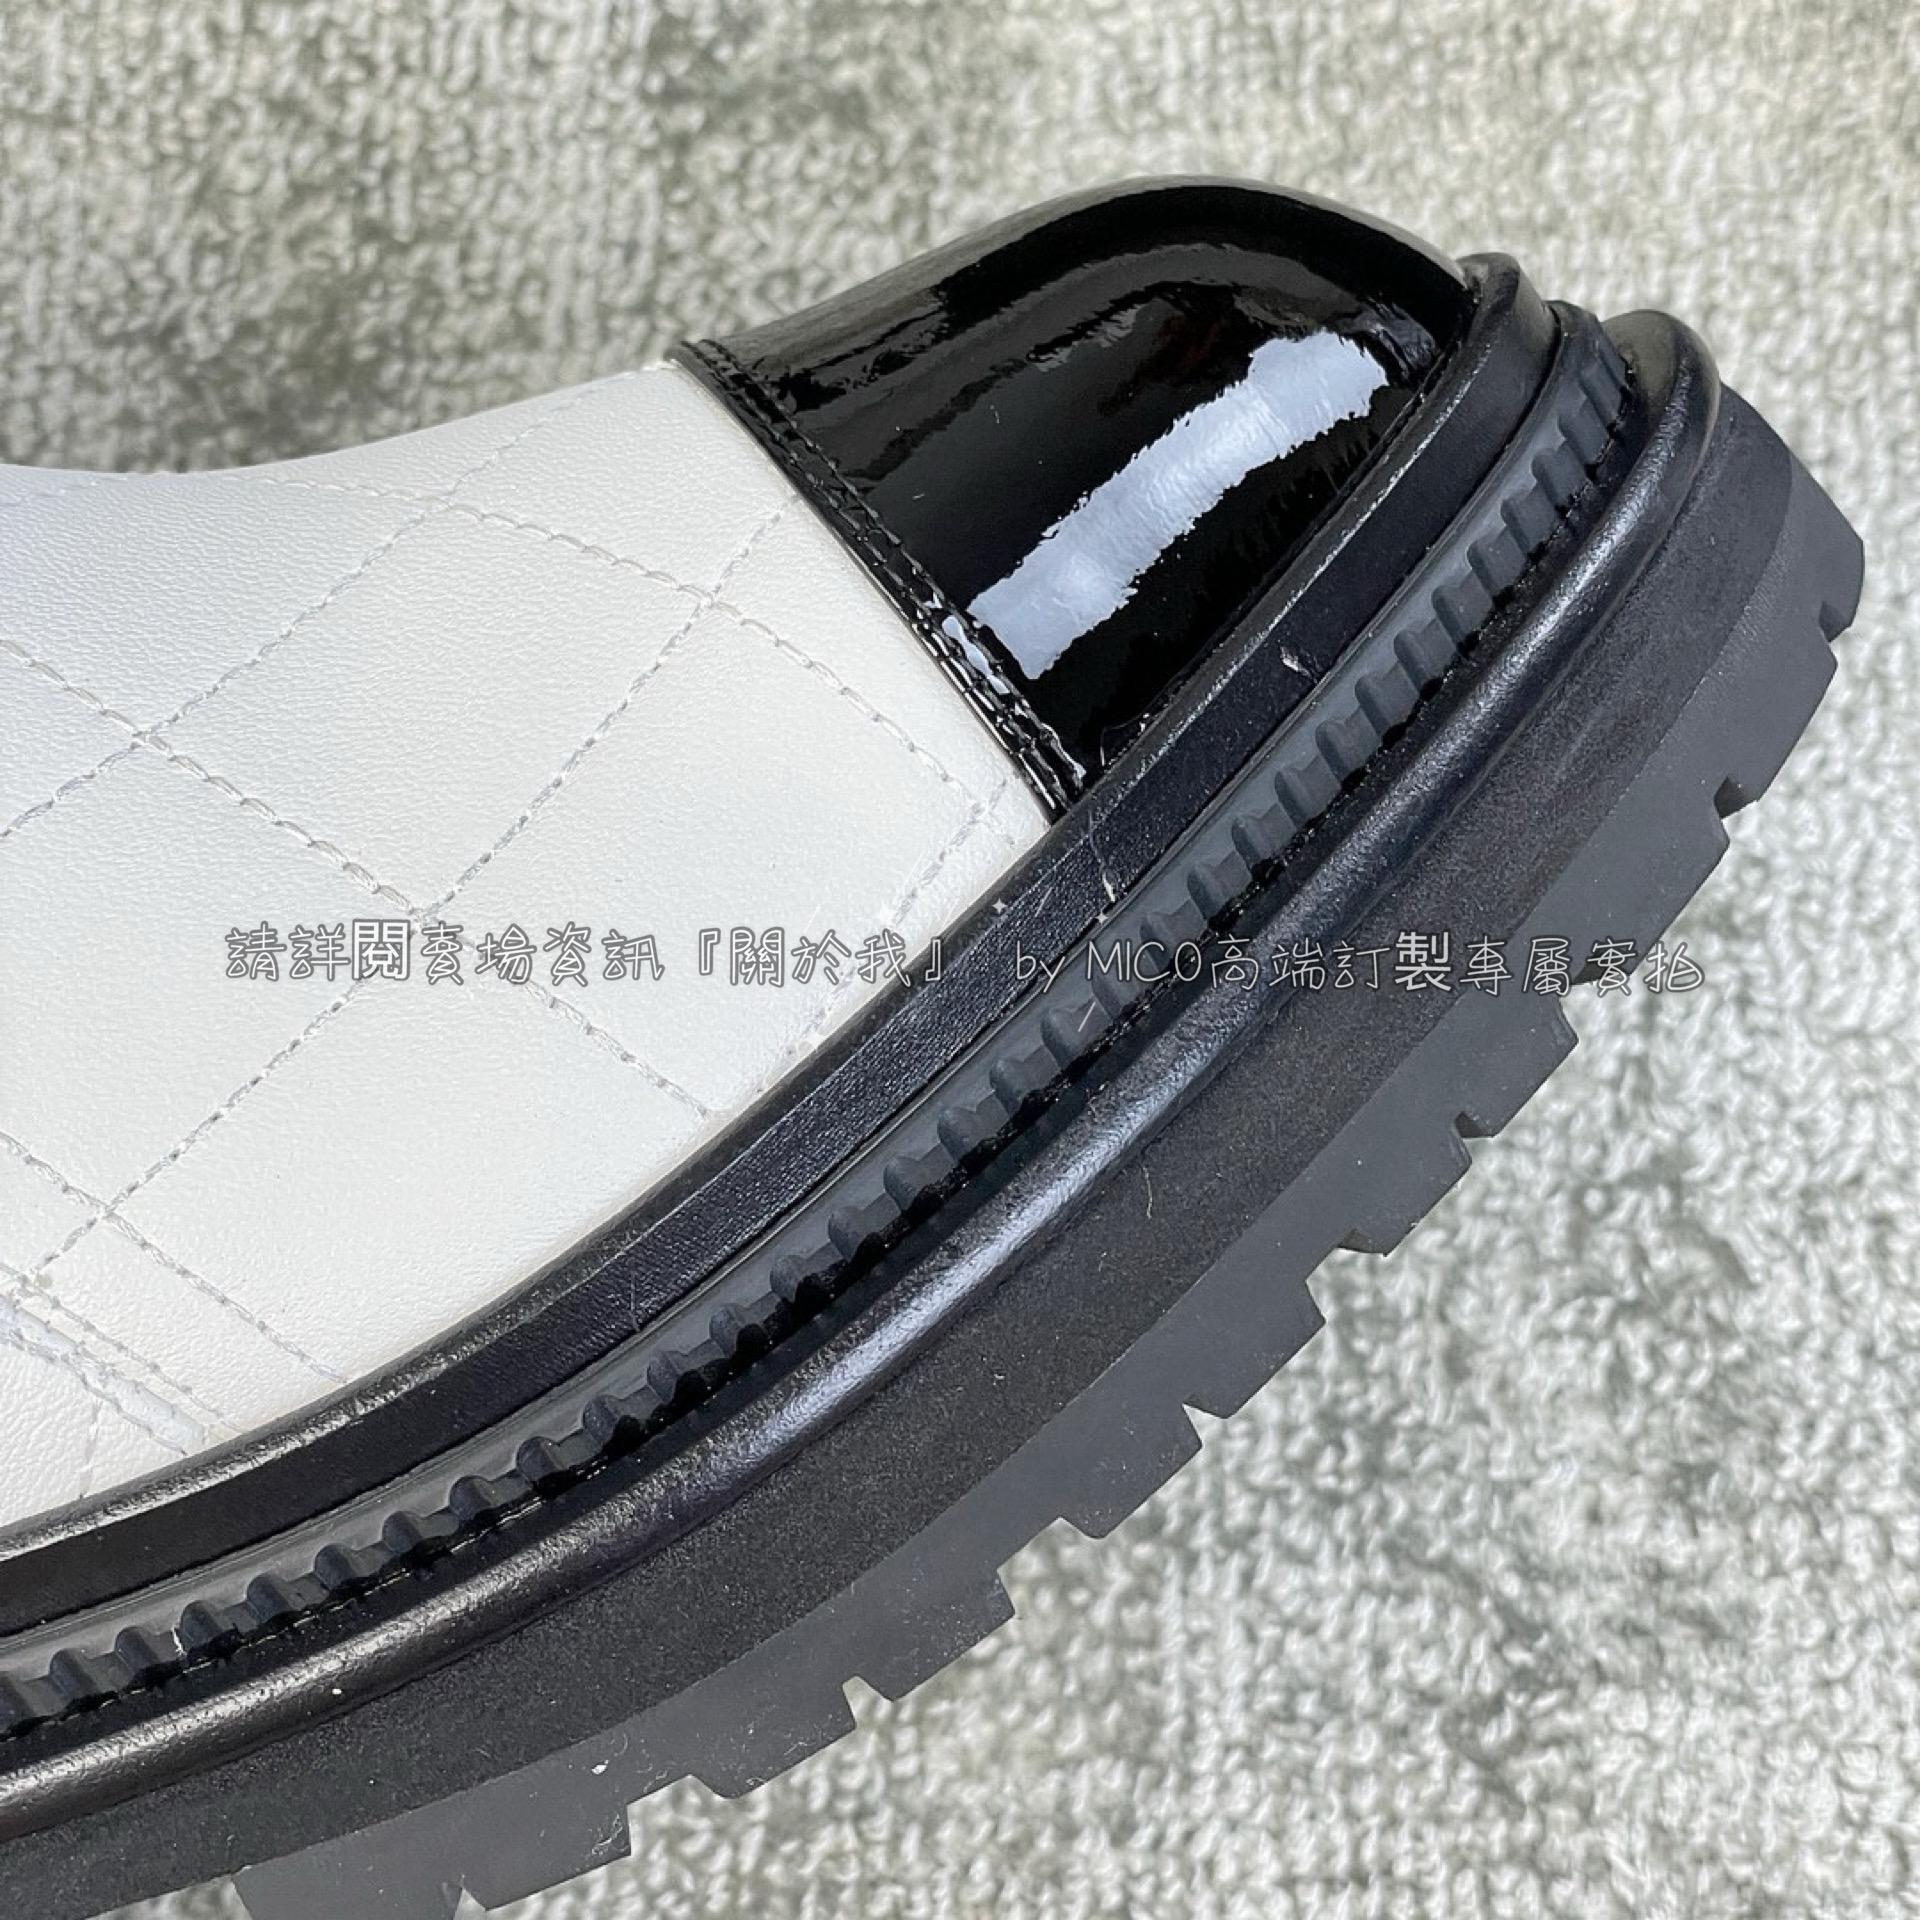 Chanel 小香23秋冬 白色 菱格切爾西短靴 SIZE 35-39(可訂製40）